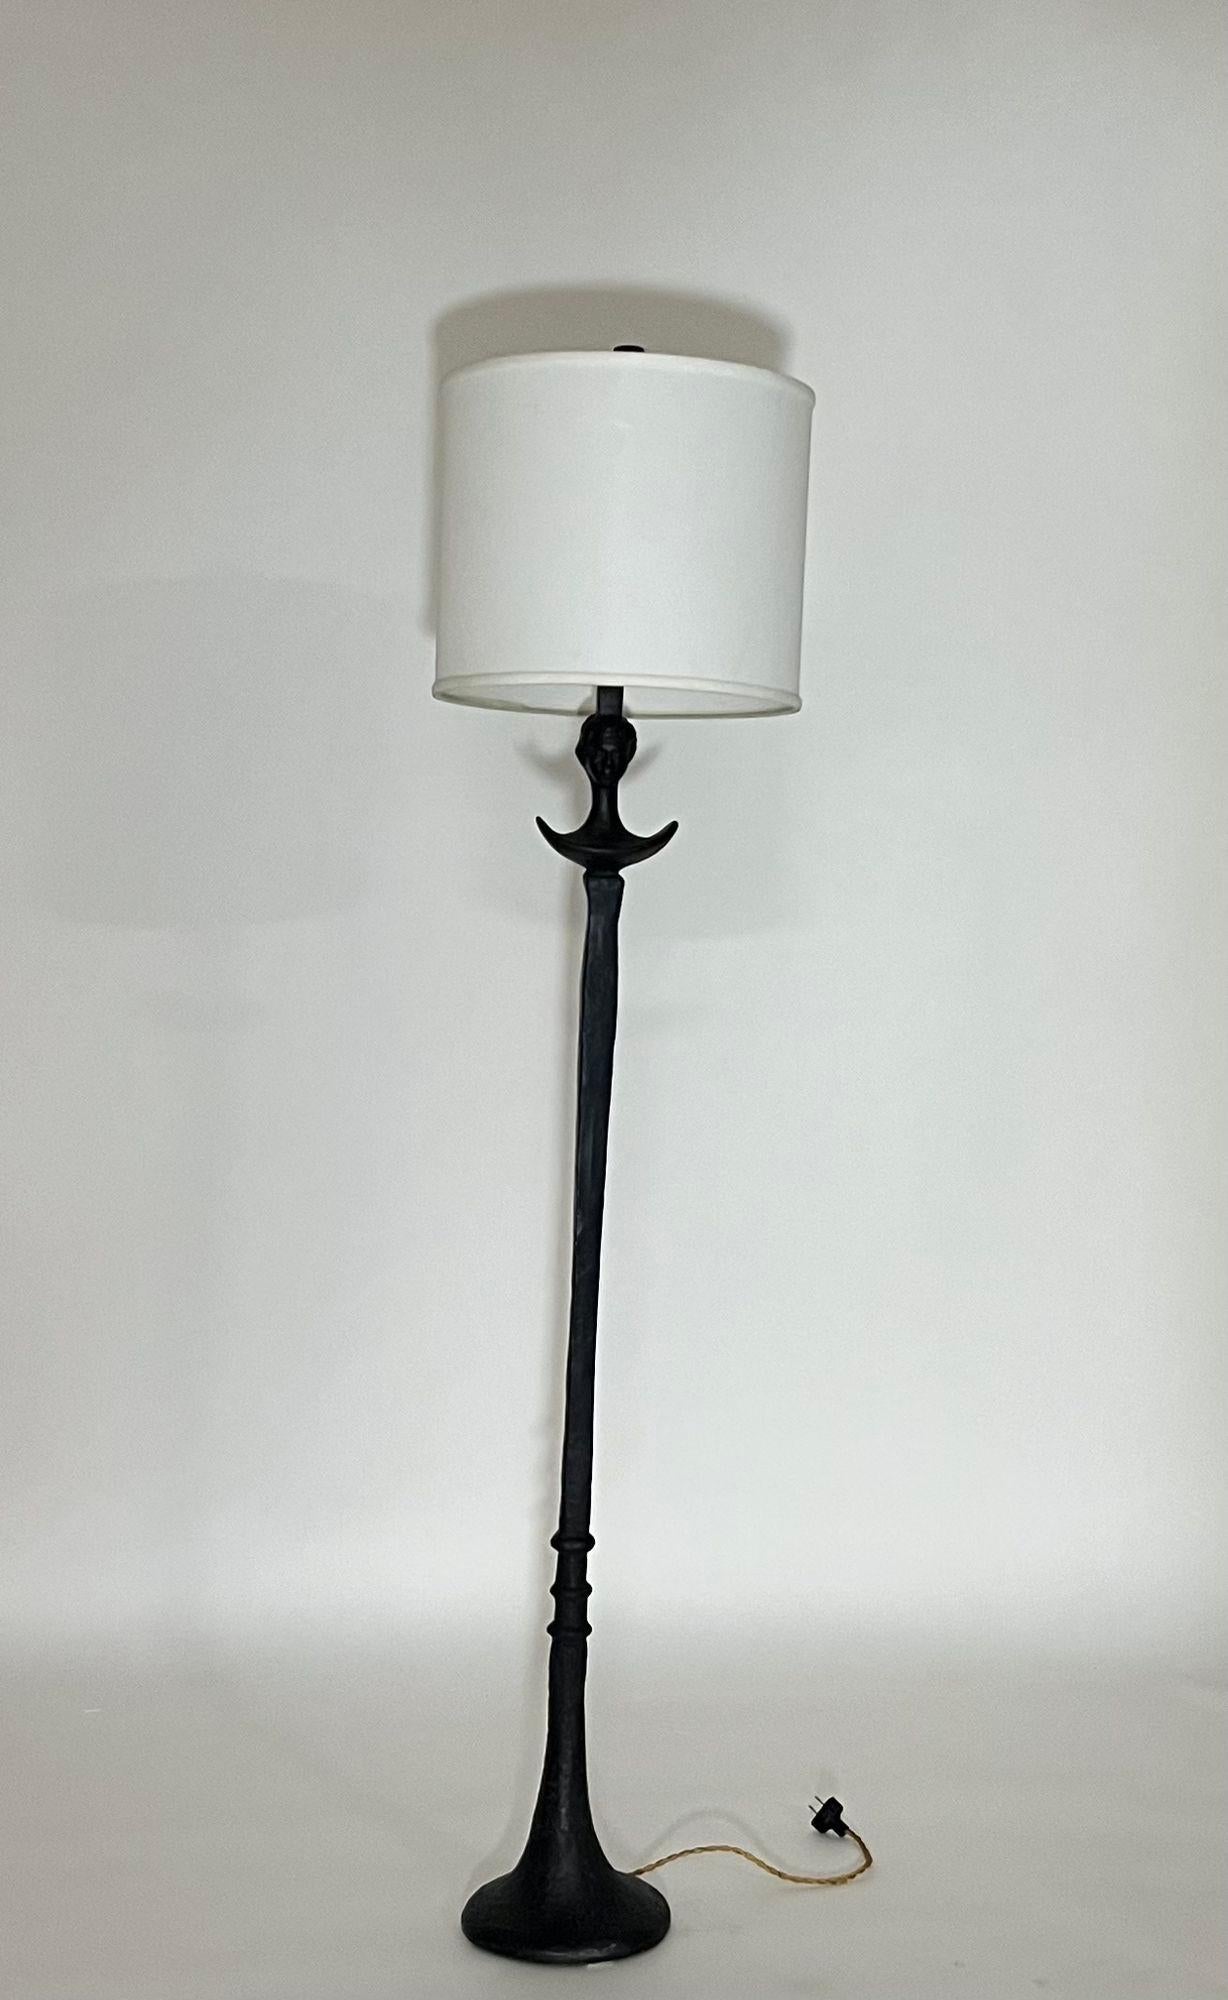 Diego Giacometti tete de femme bronze/noir lampadaire.